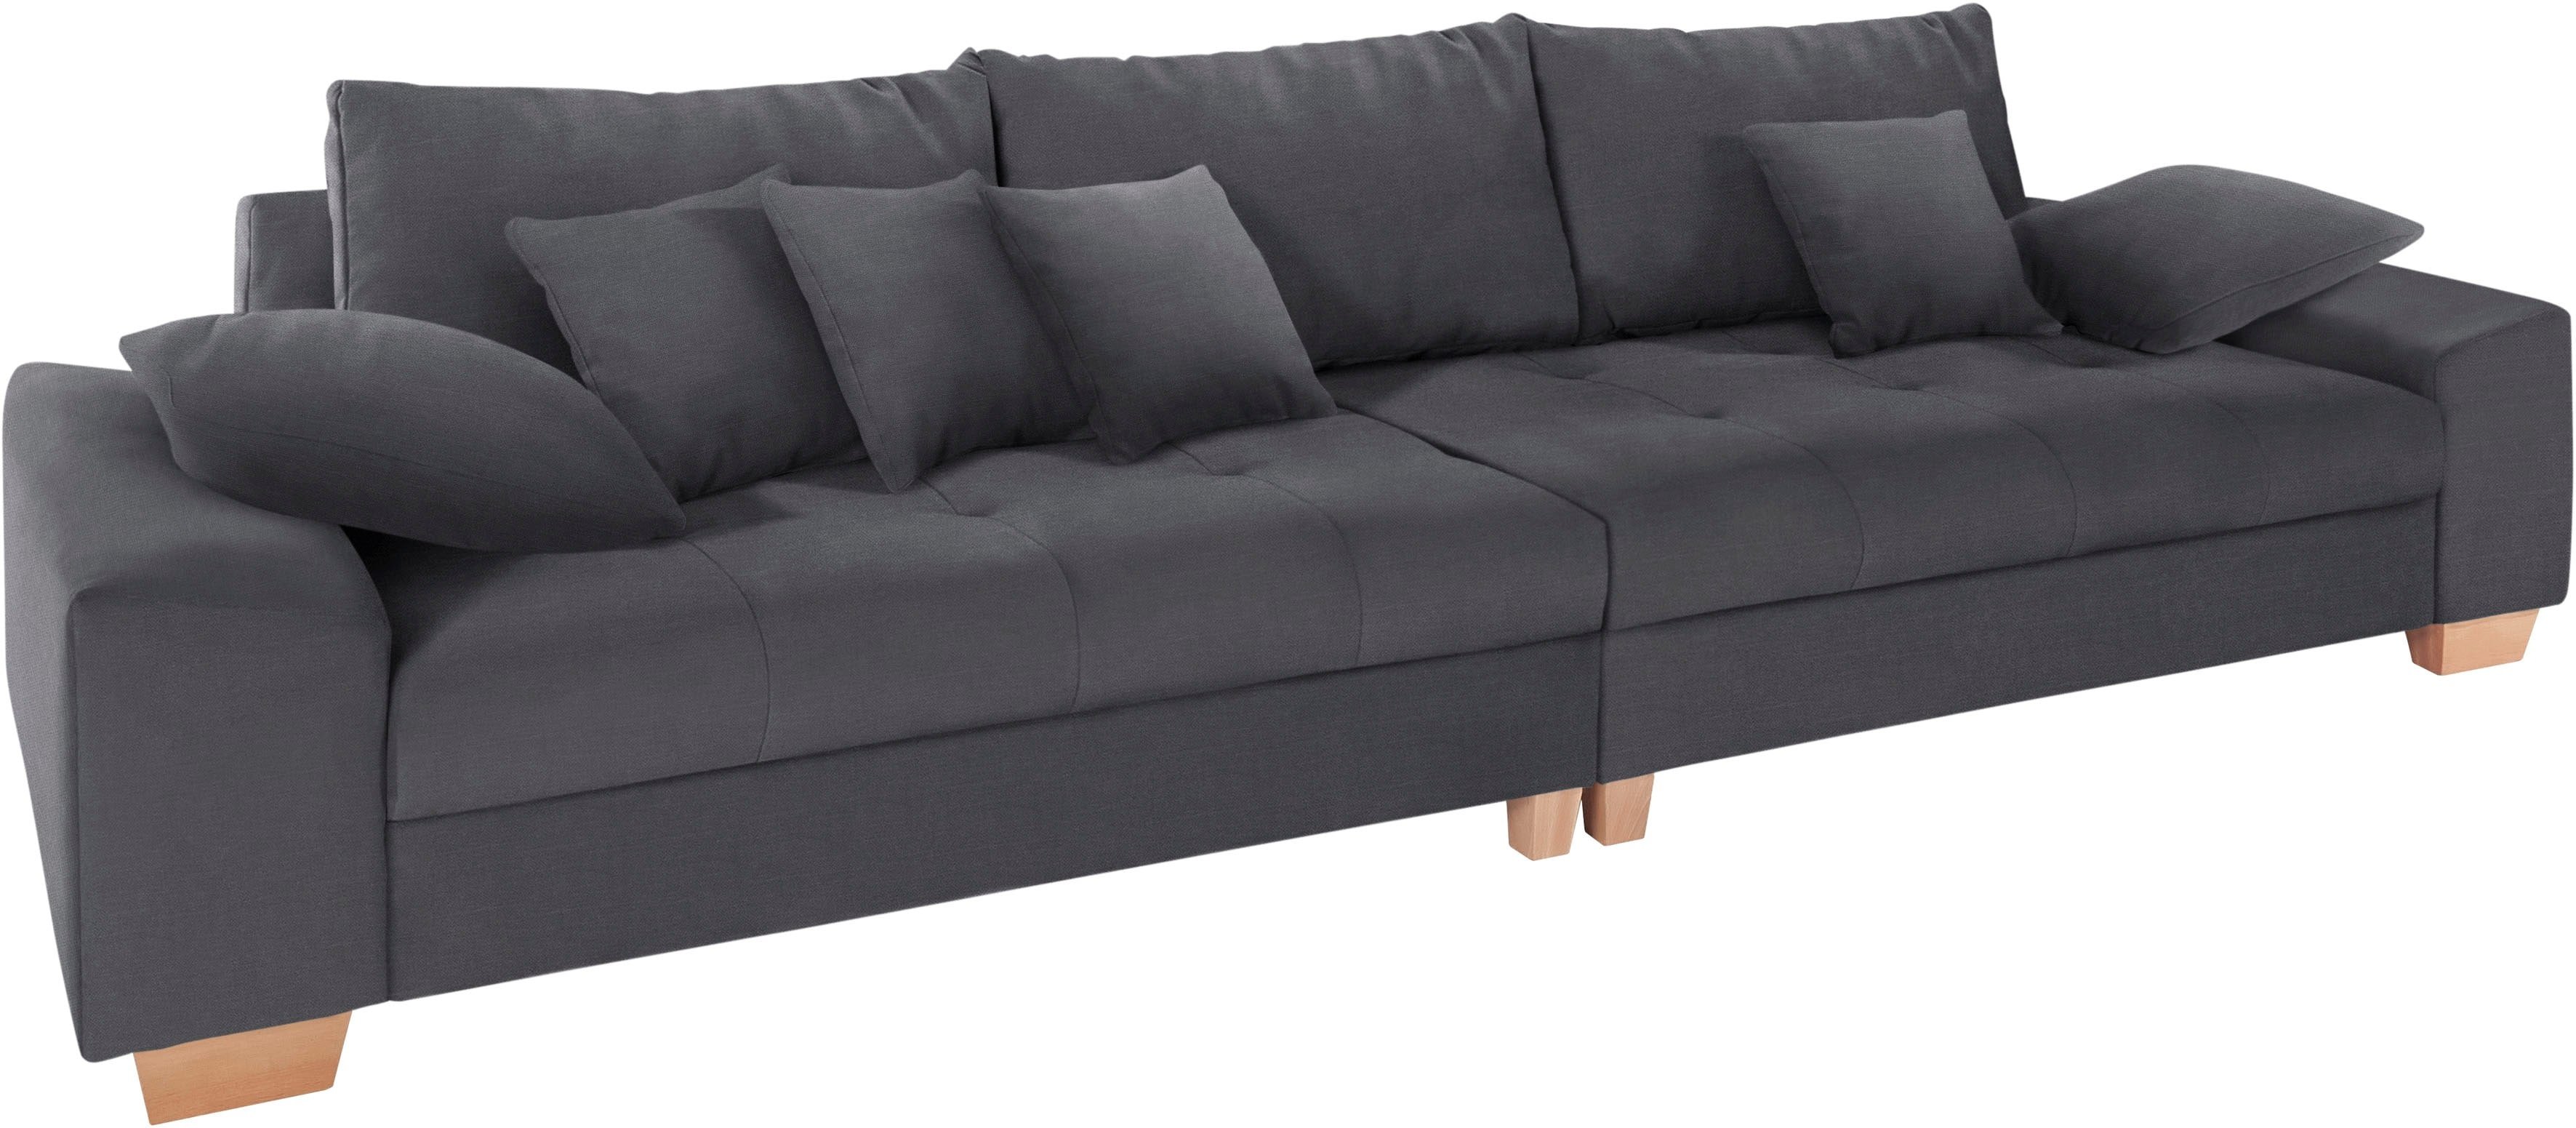 Mr. Couch Big-Sofa »Nikita« Mr. Couch stone